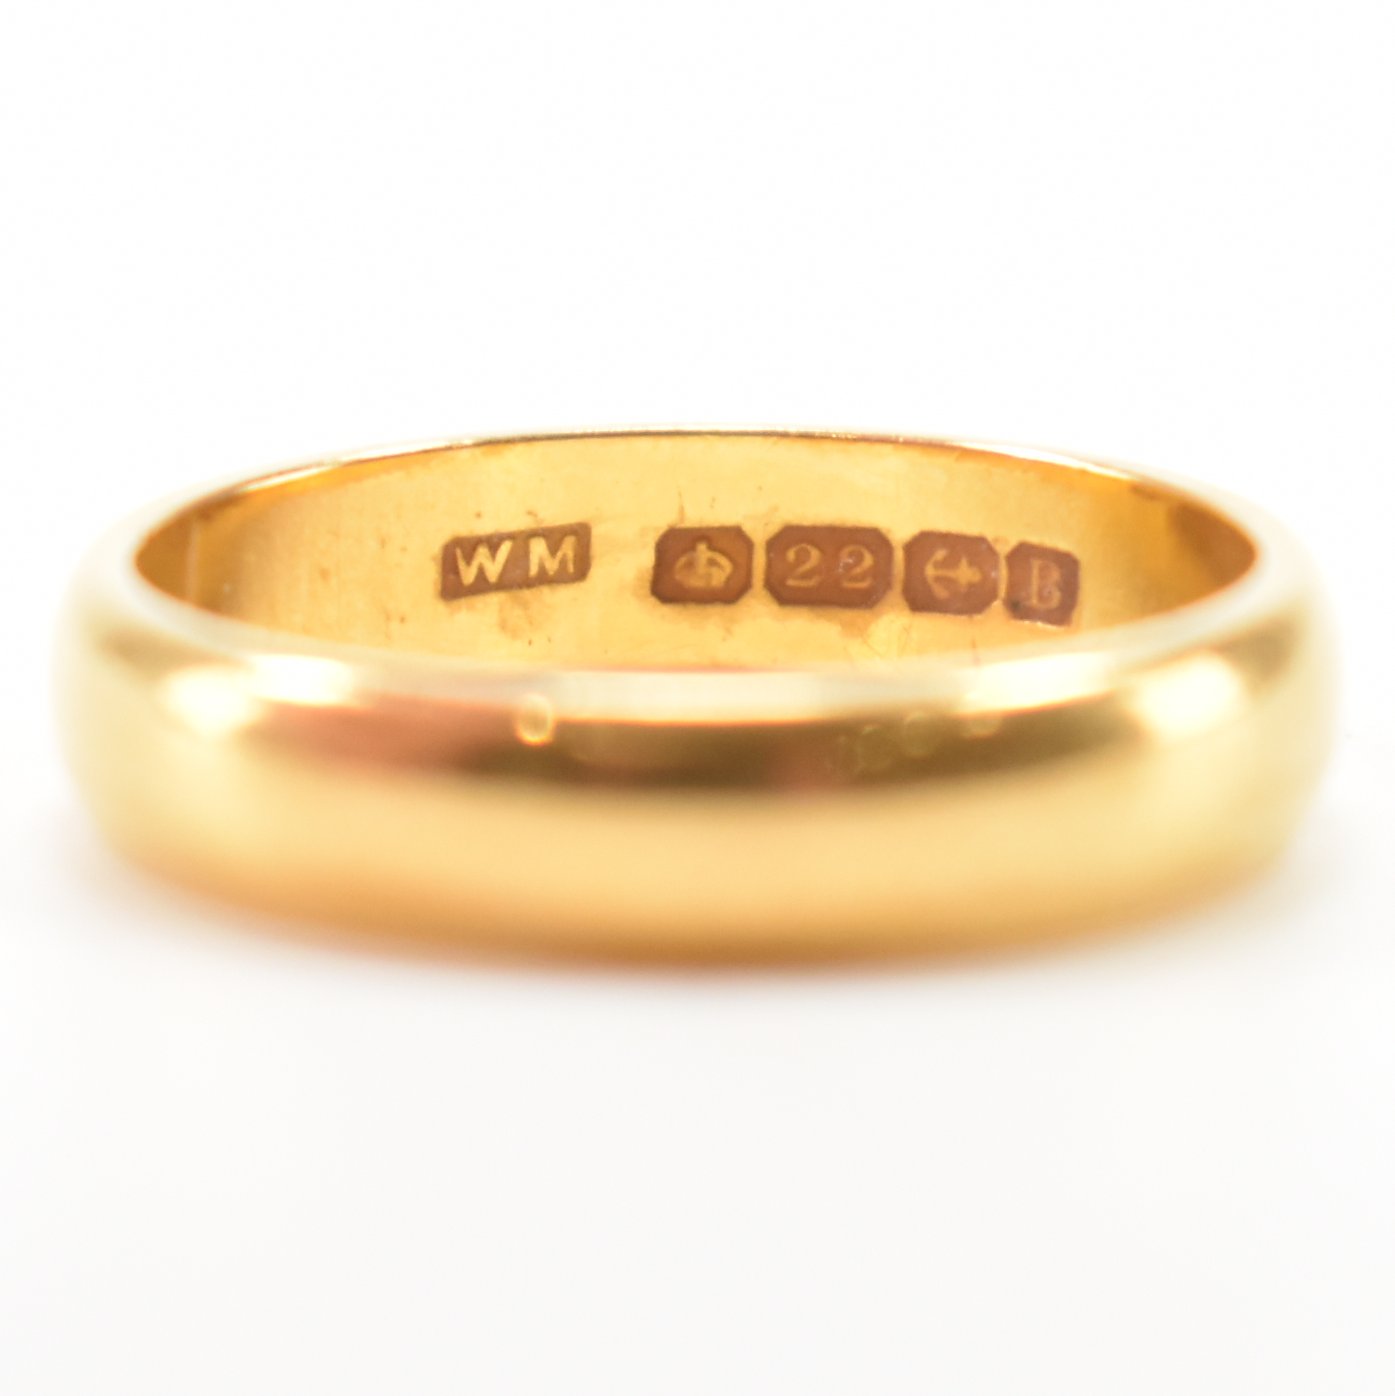 HALLMARKED 22CT GOLD WEDDING BAND RING - Image 5 of 6